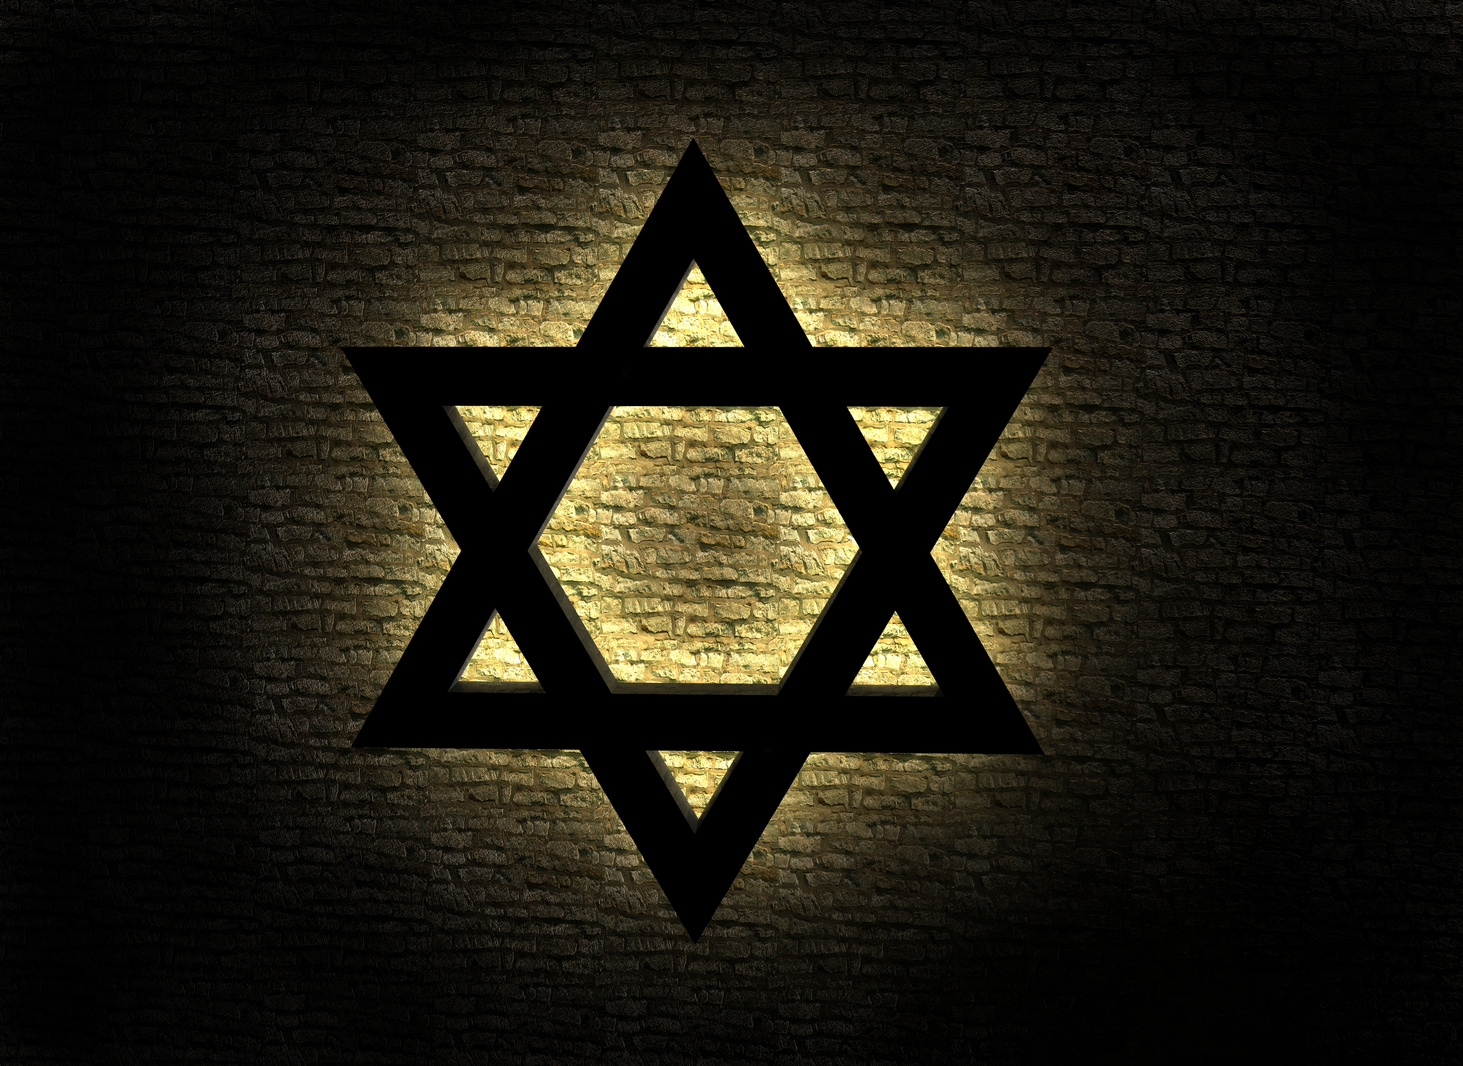 Illuminated Star of David on a dark background